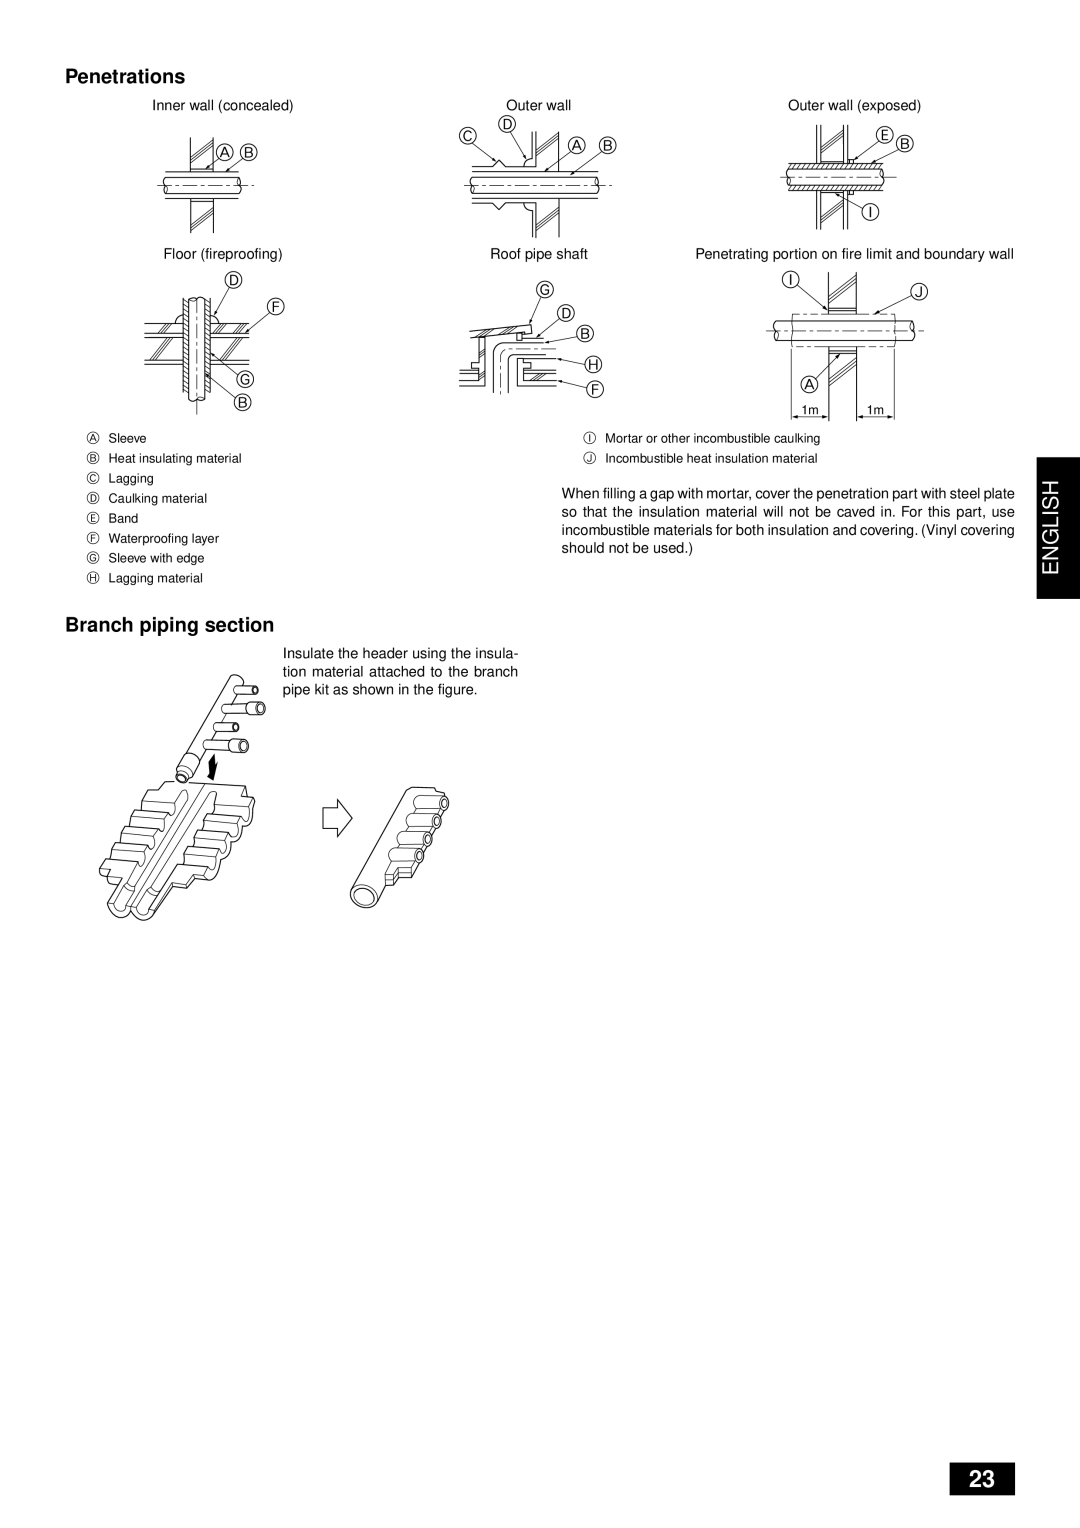 Mitsubishi Electronics PUHY-YMC installation manual Penetrations, Branch piping section, English 